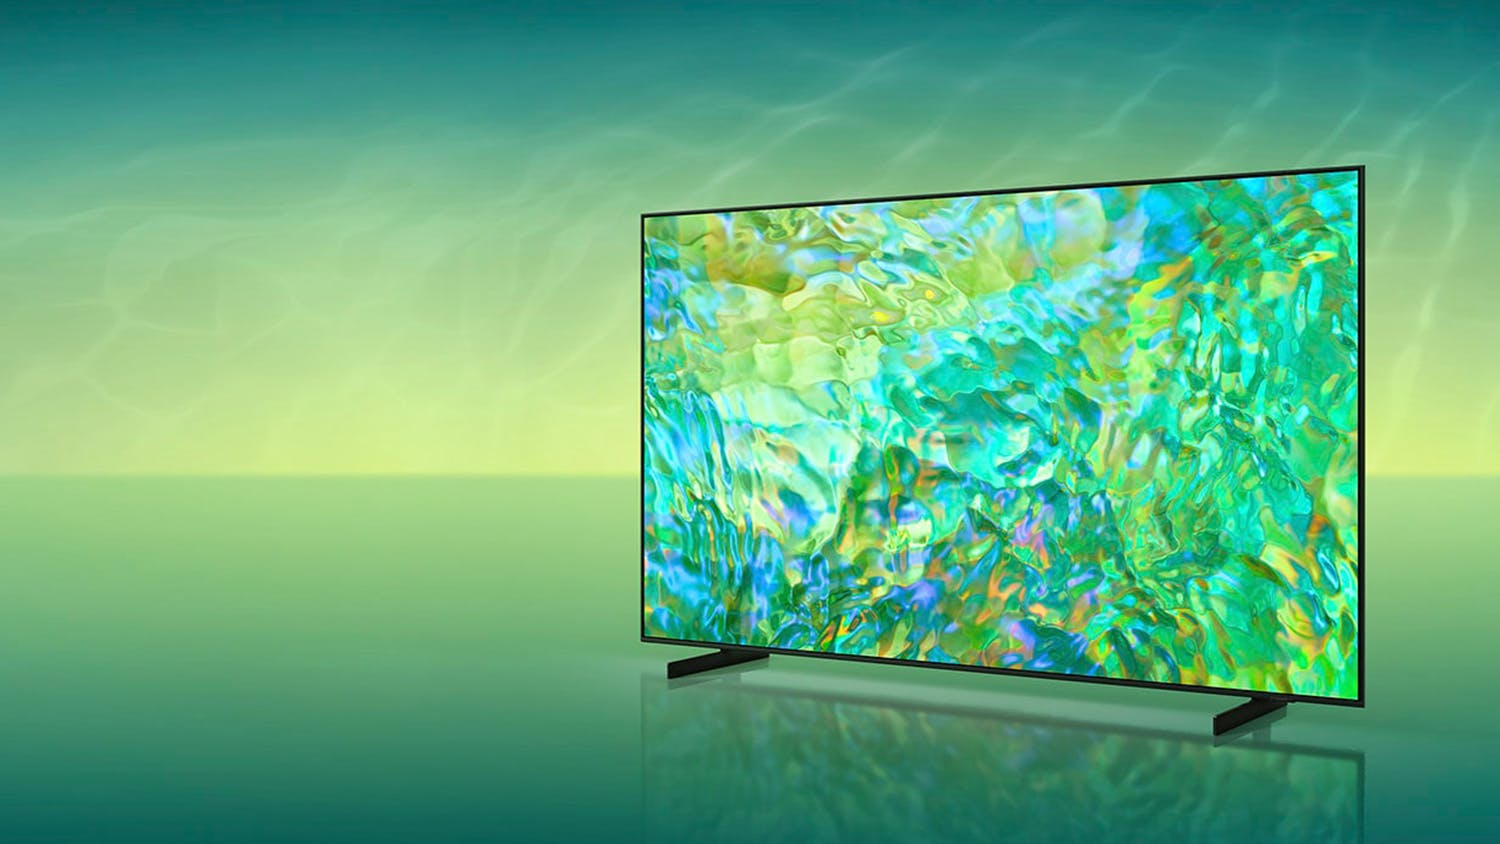 Samsung 65" CU8000 Crystal UHD Smart 4K LED TV